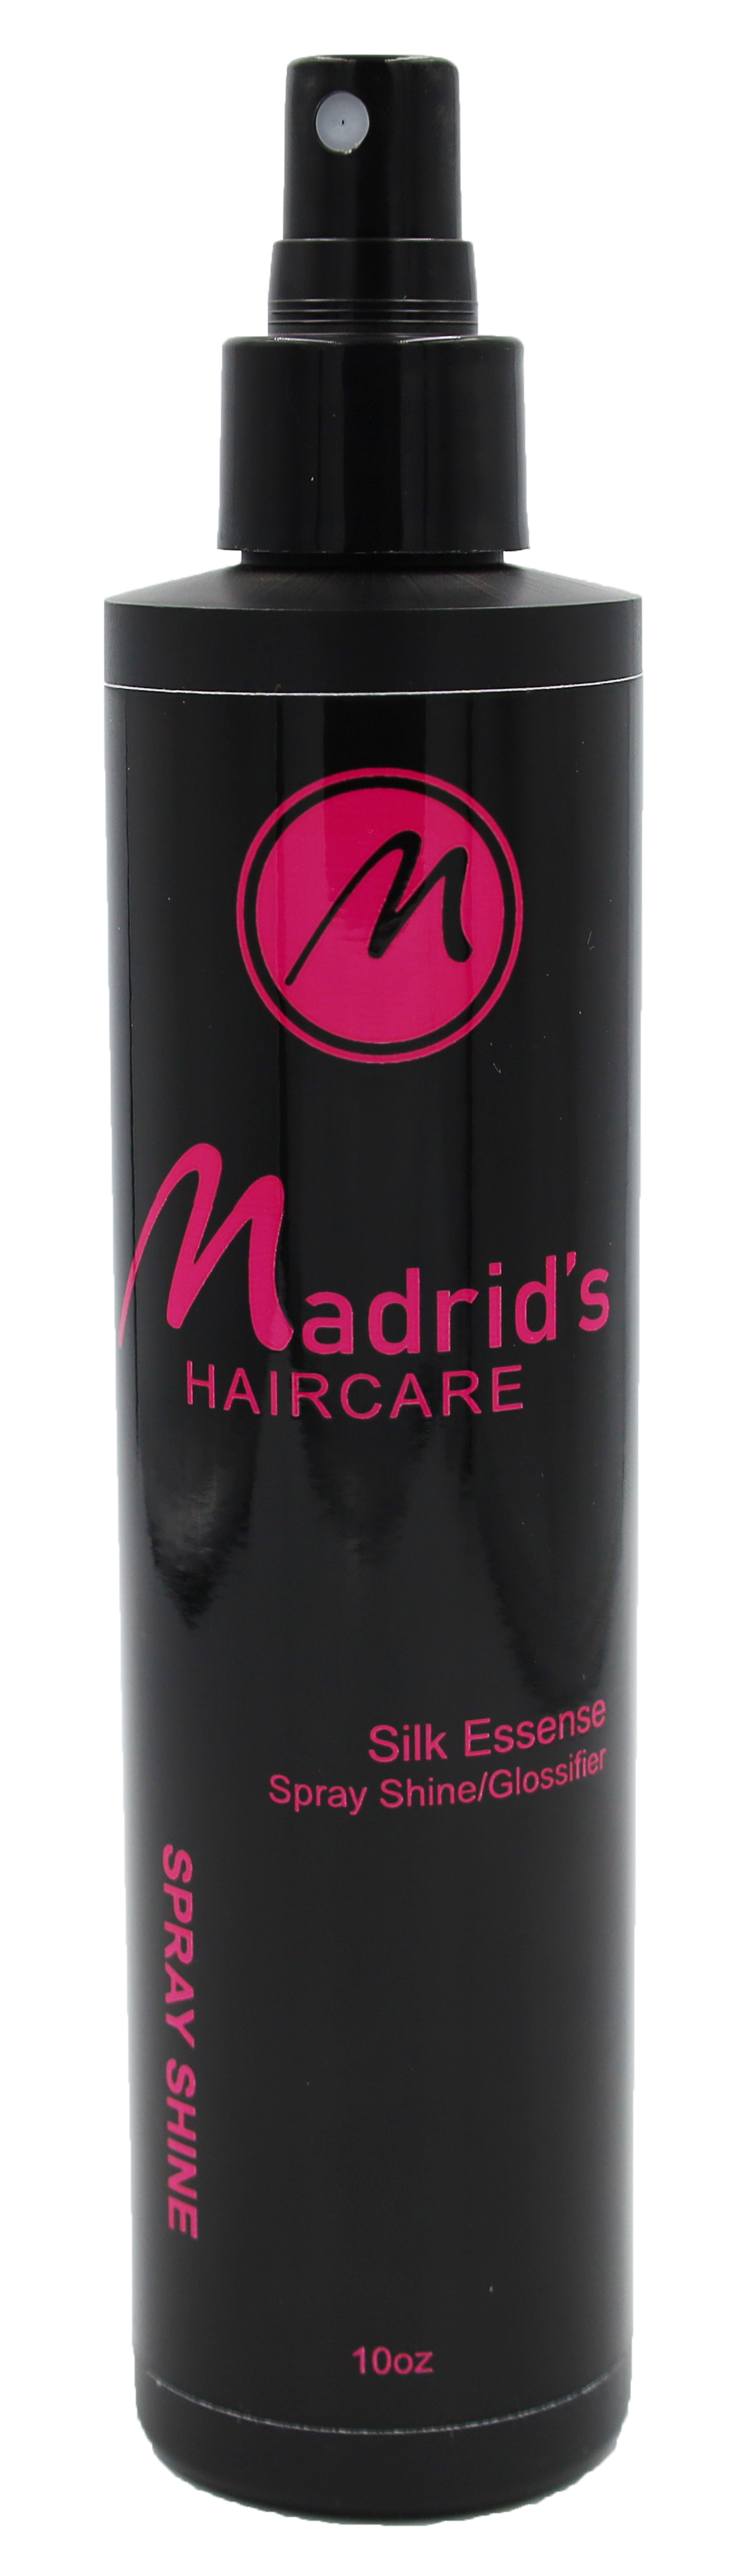 Madrid's Silk Essence Spray Shine